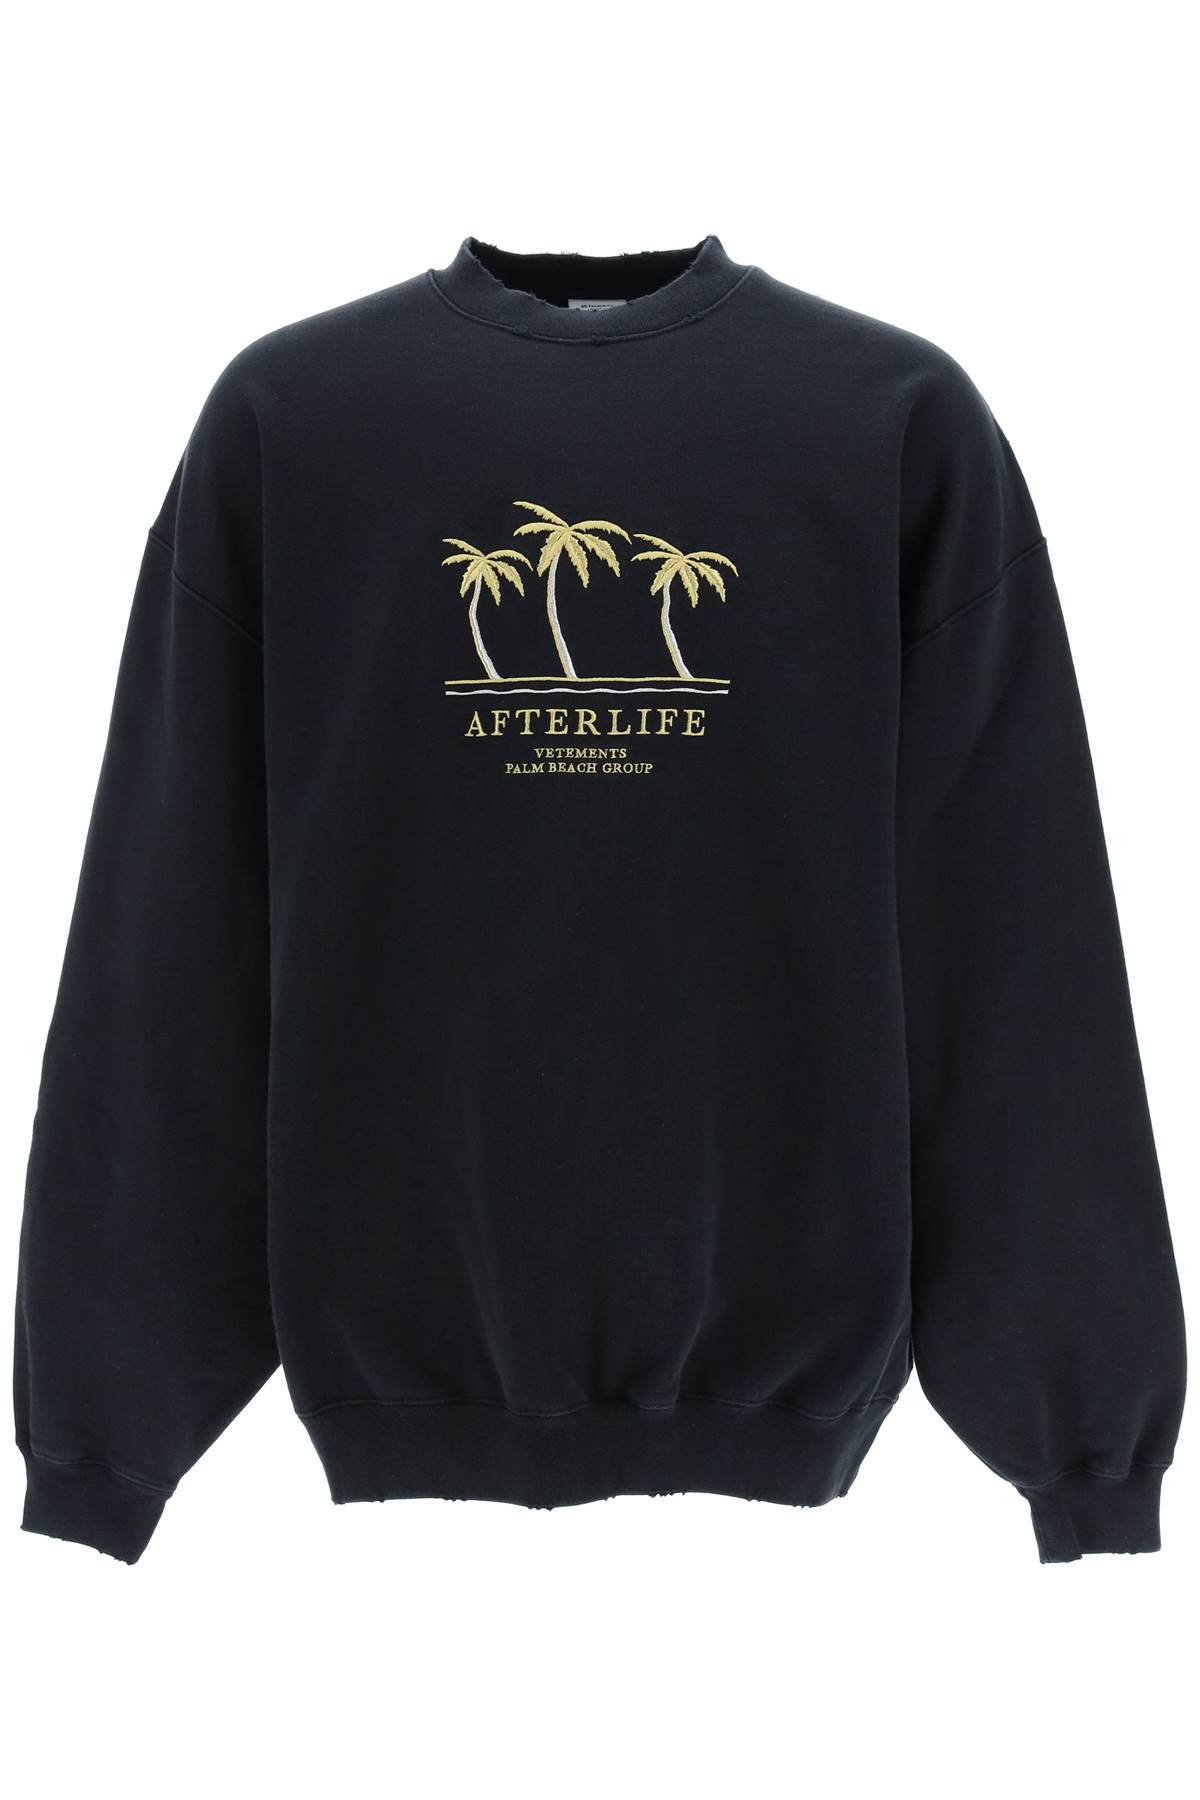 Afterlife Embroidery Sweatshirt